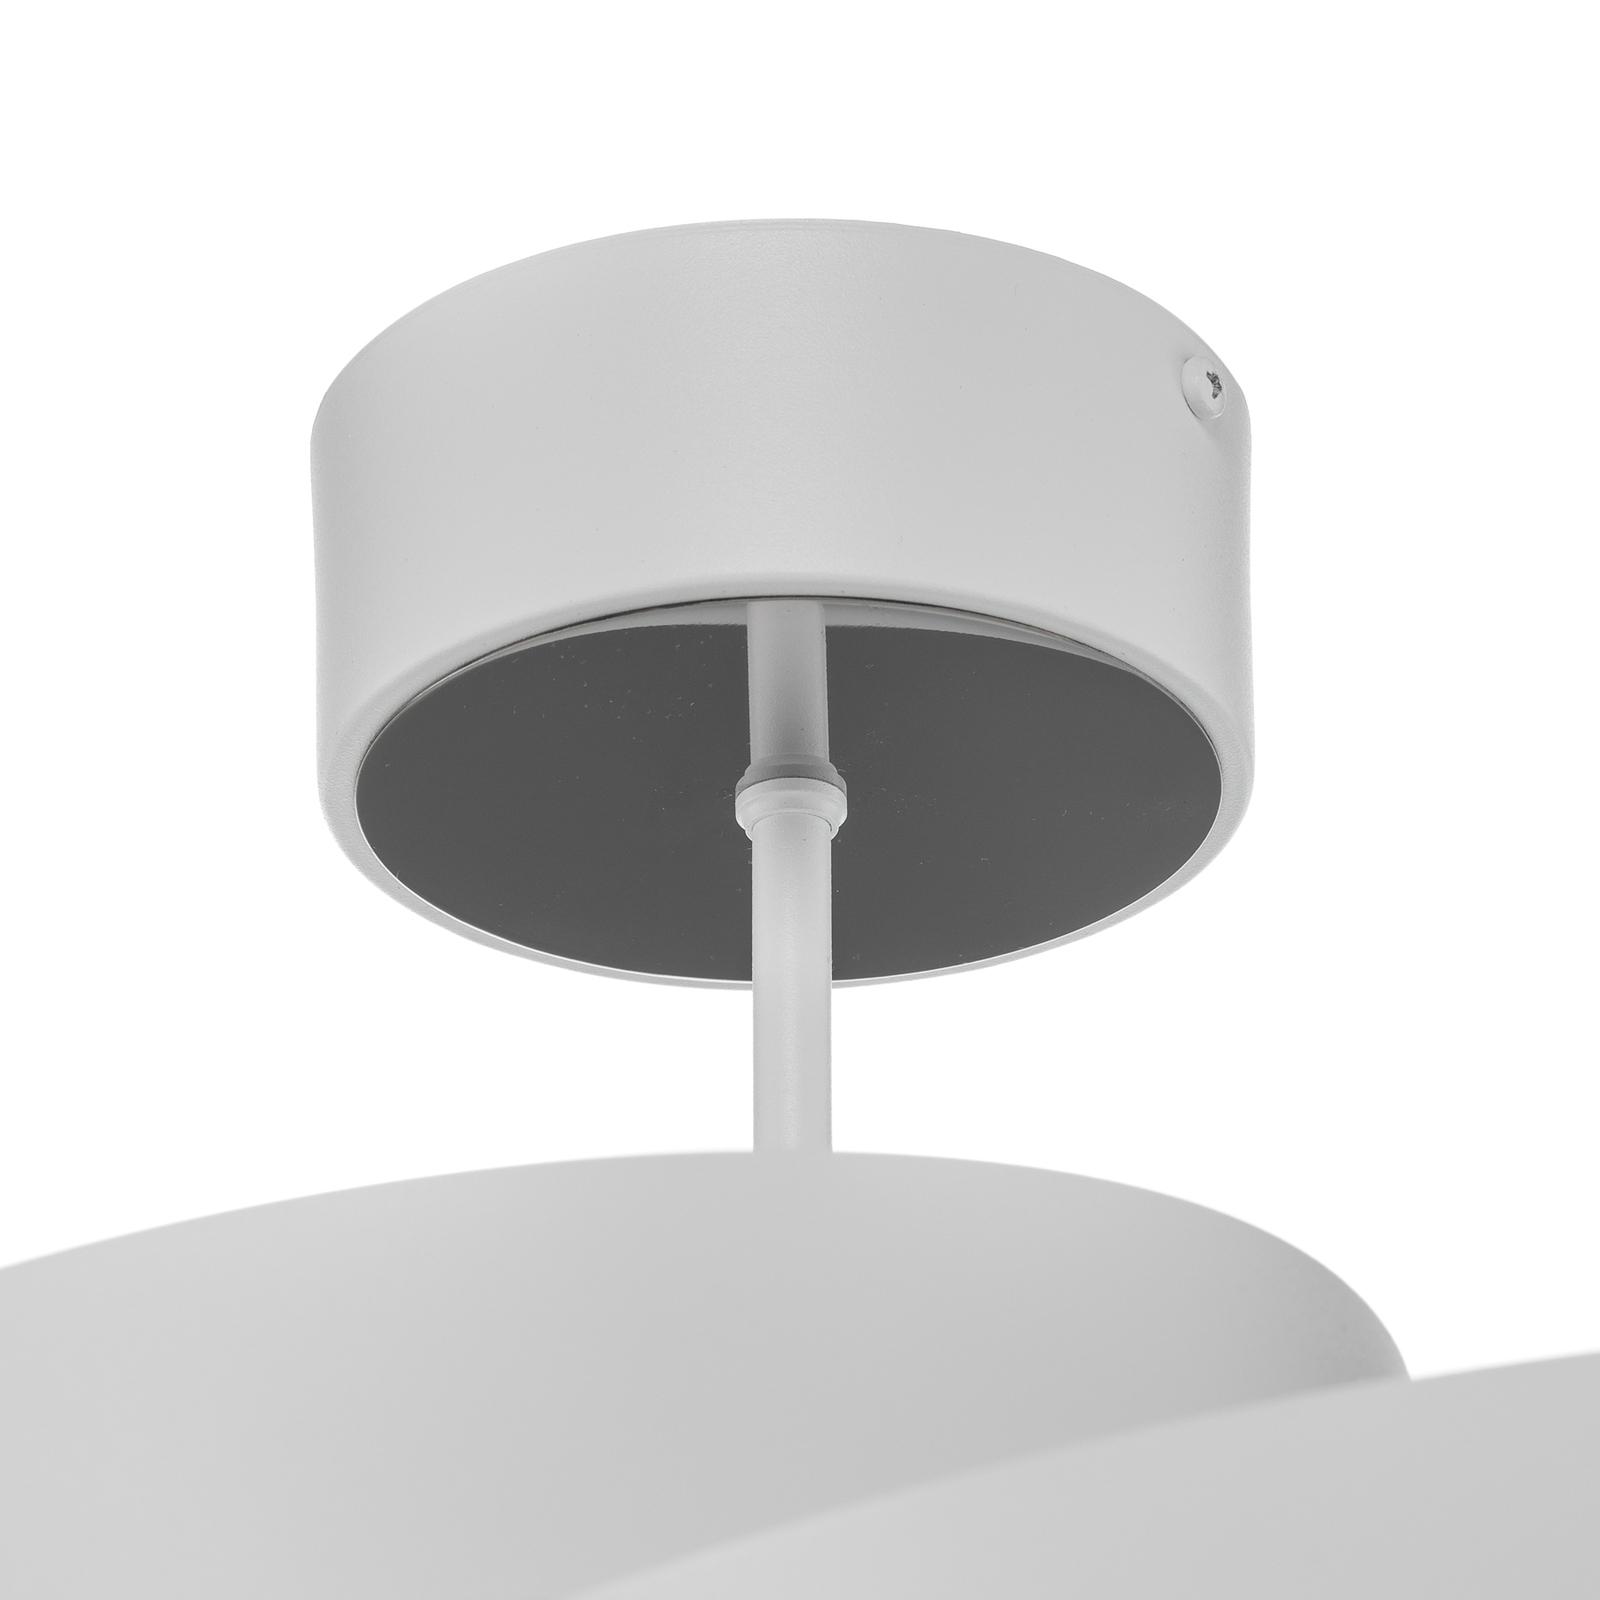 Lampa sufitowa Vento, biała Ø 50cm